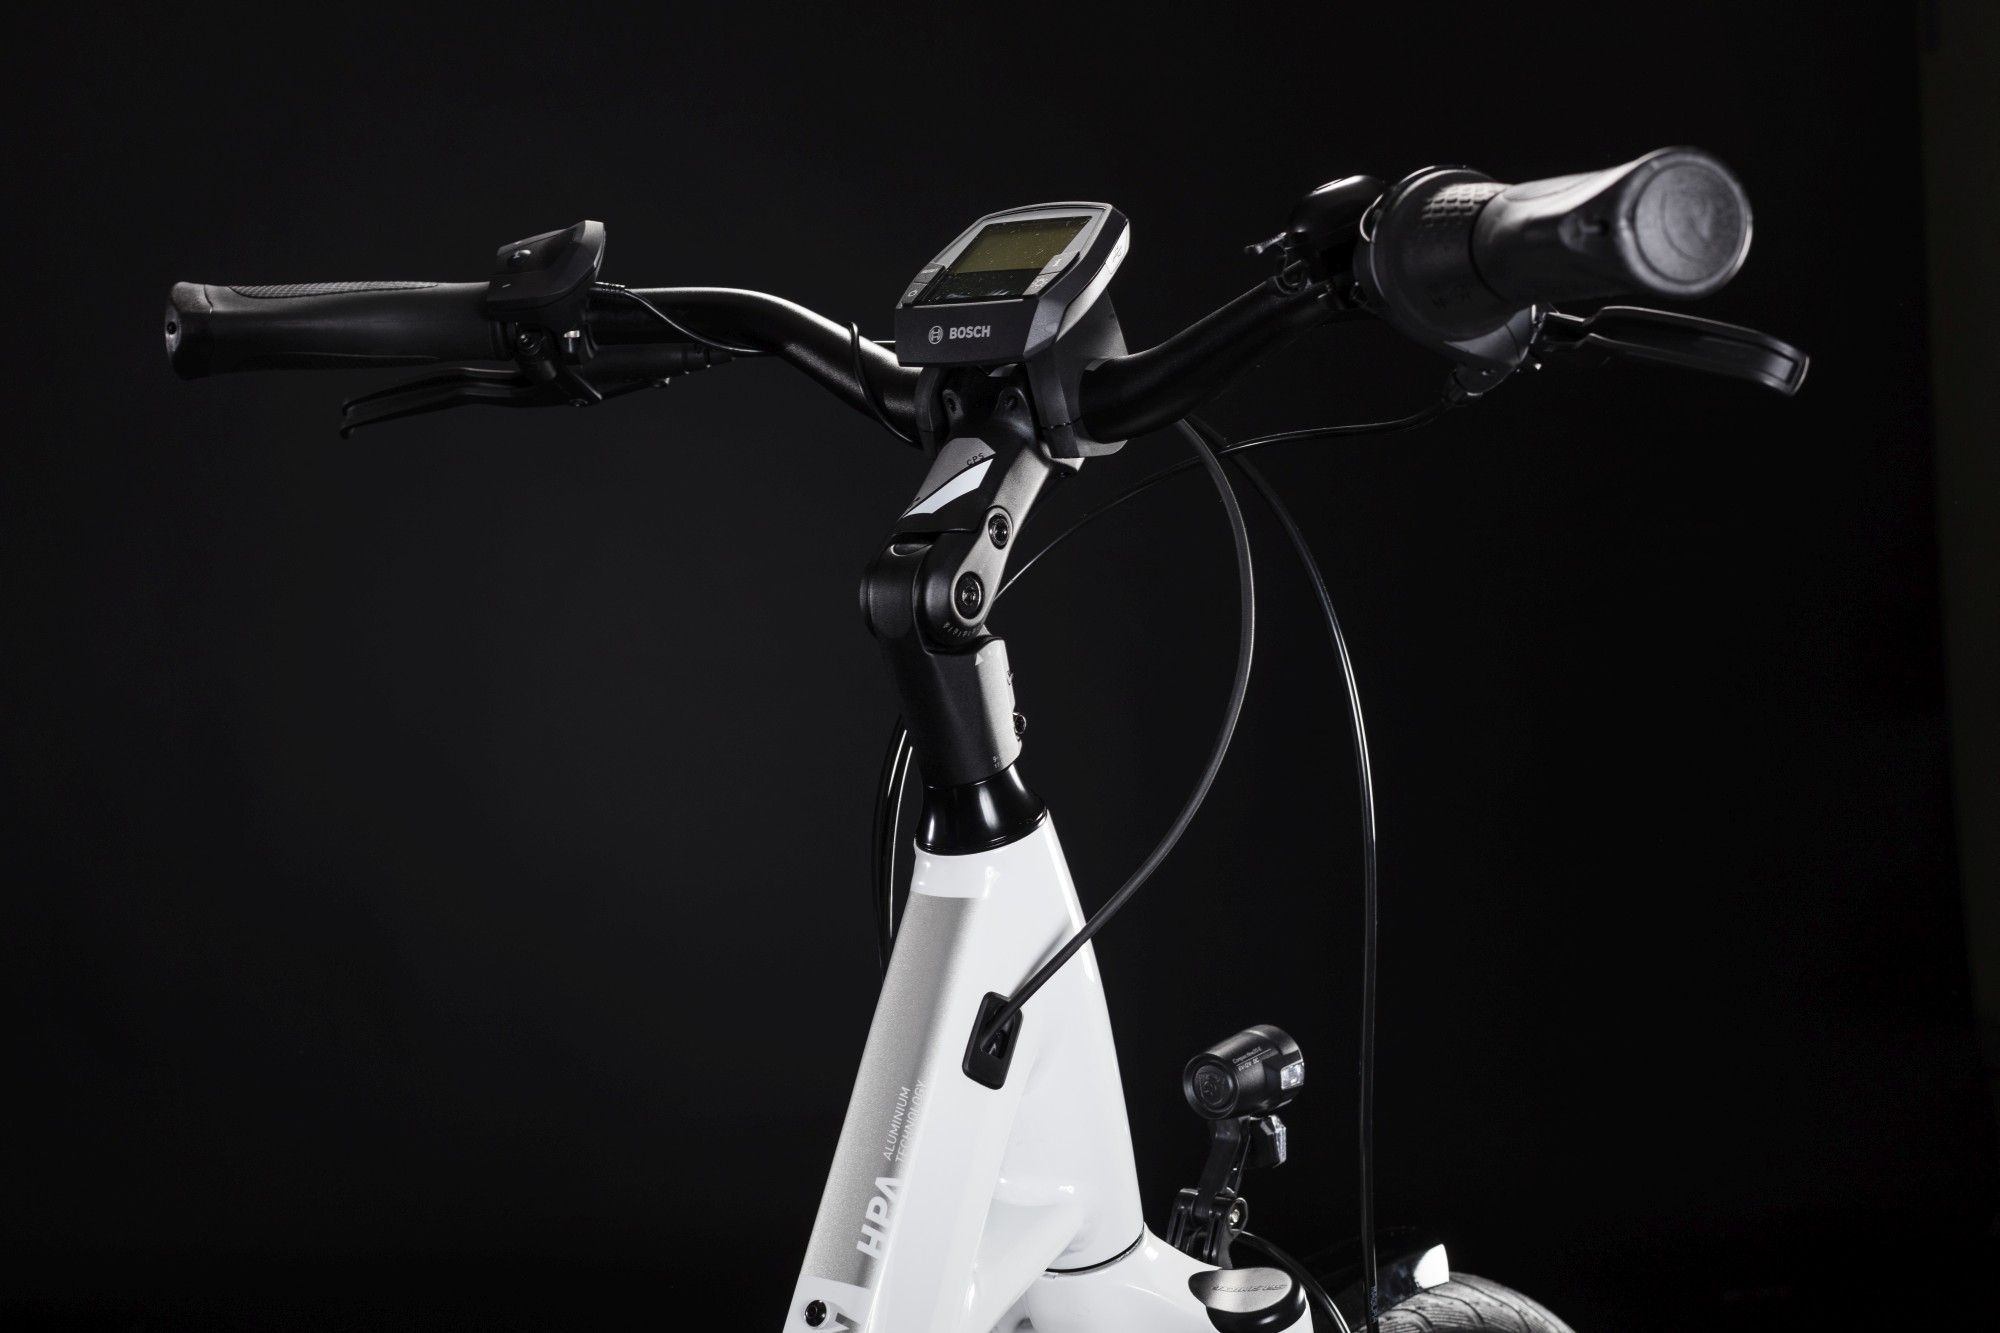 Cube Town Hybrid Pro RT 500 Damen white´n´silver (2019) - Fahrrad Online  Shop